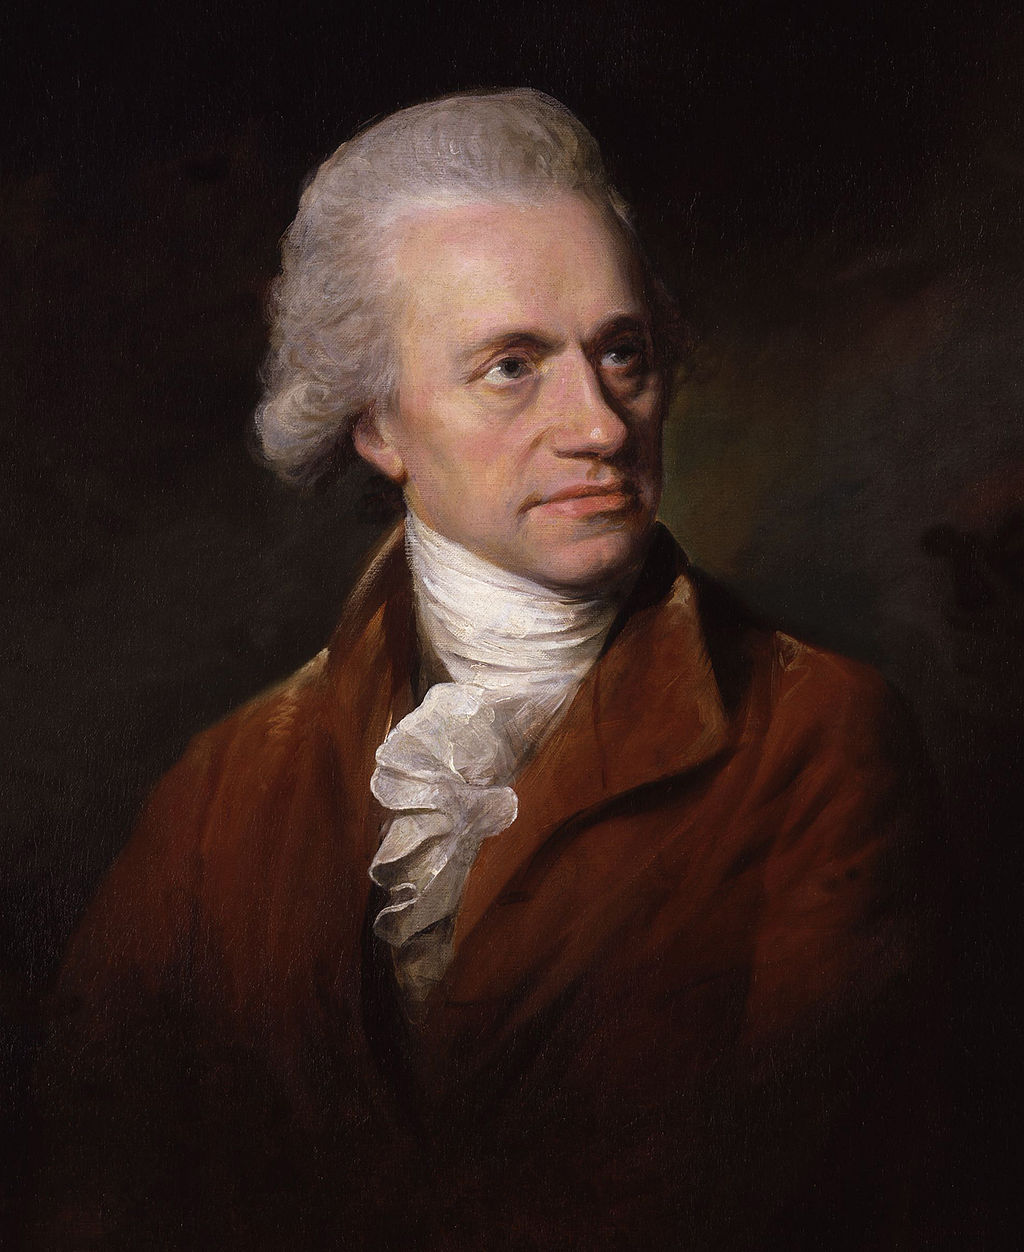 Cuadro de Sir William Herschel.